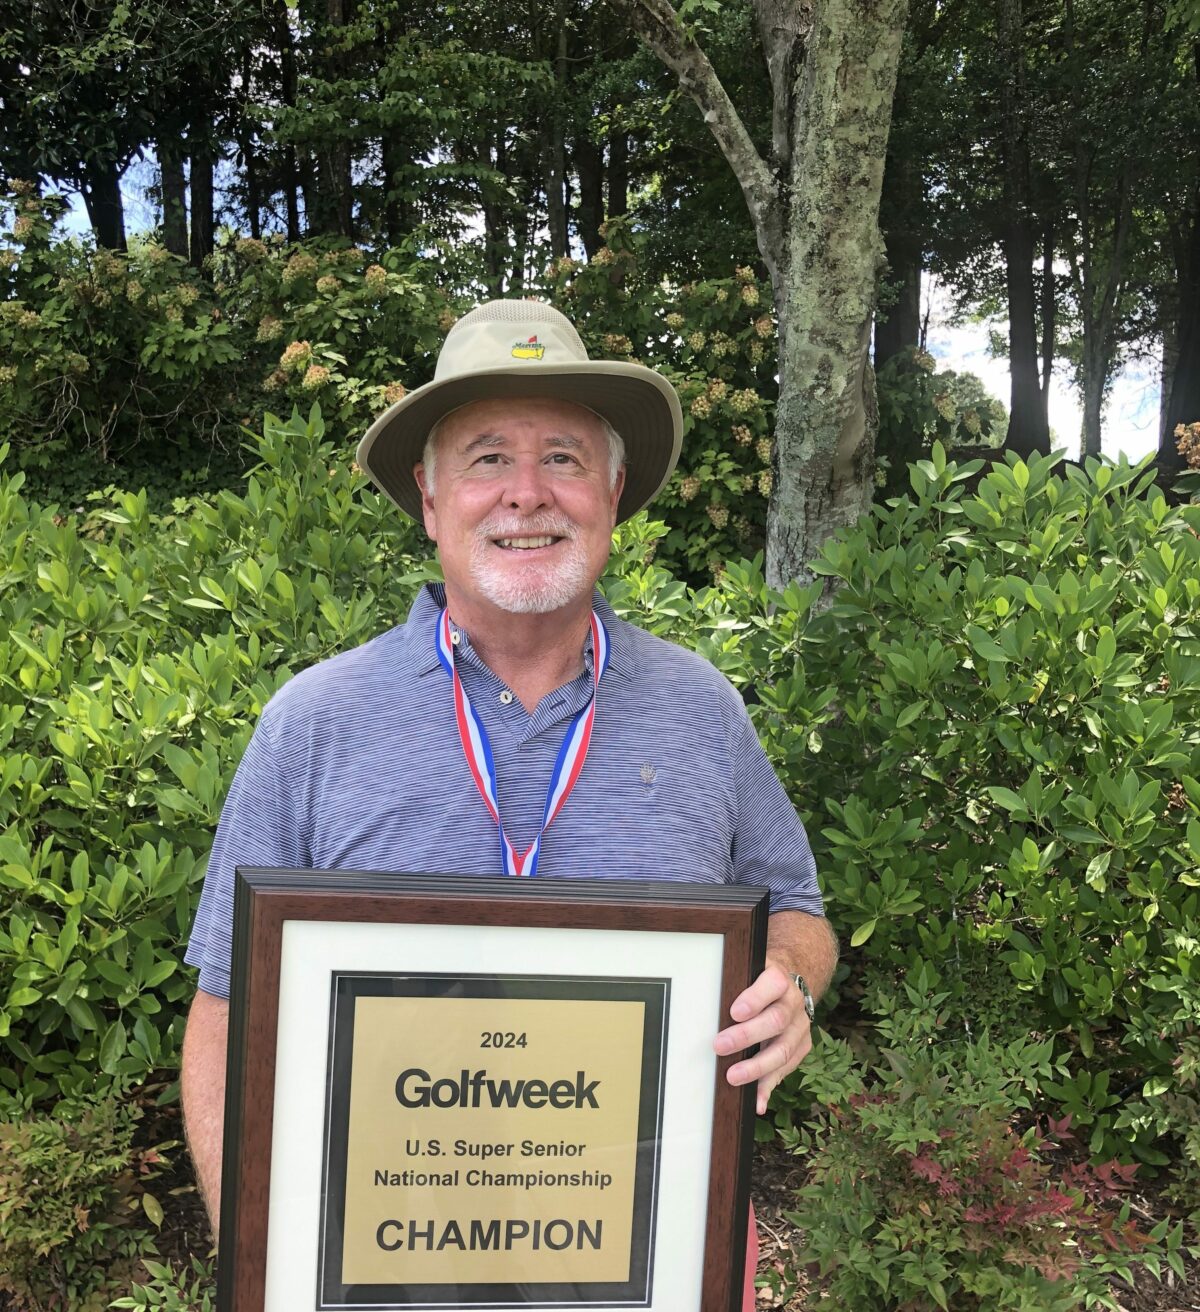 Stevie Cannady prevails at Golfweek Super Senior National Championship for a senior golf milestone